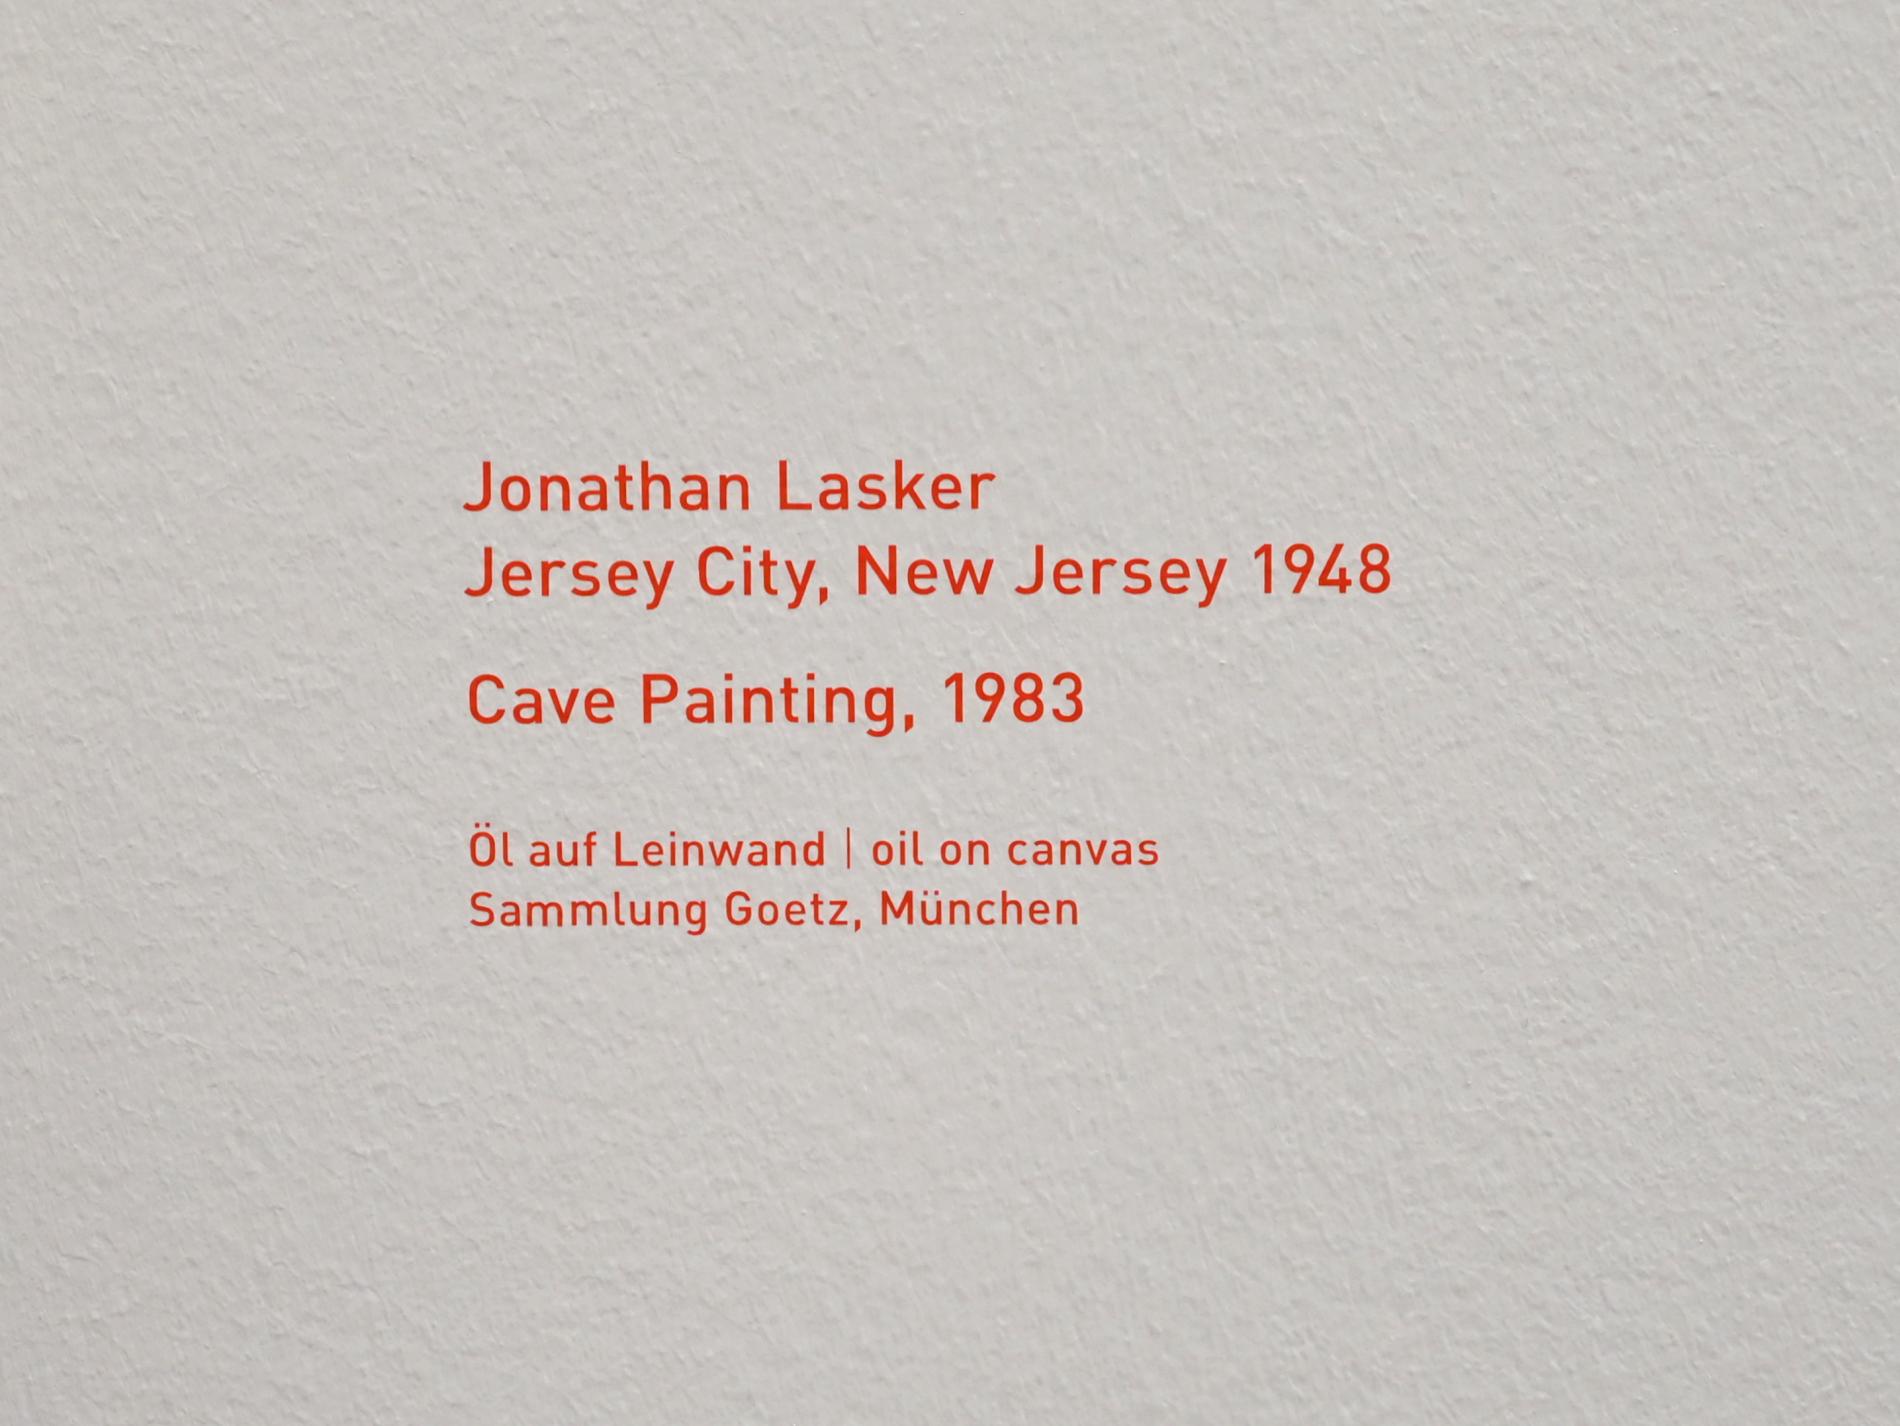 Jonathan Lasker (1983), Cave Painting - Höhlenmalerei, München, Pinakothek der Moderne, Saal 15, 1983, Bild 2/2